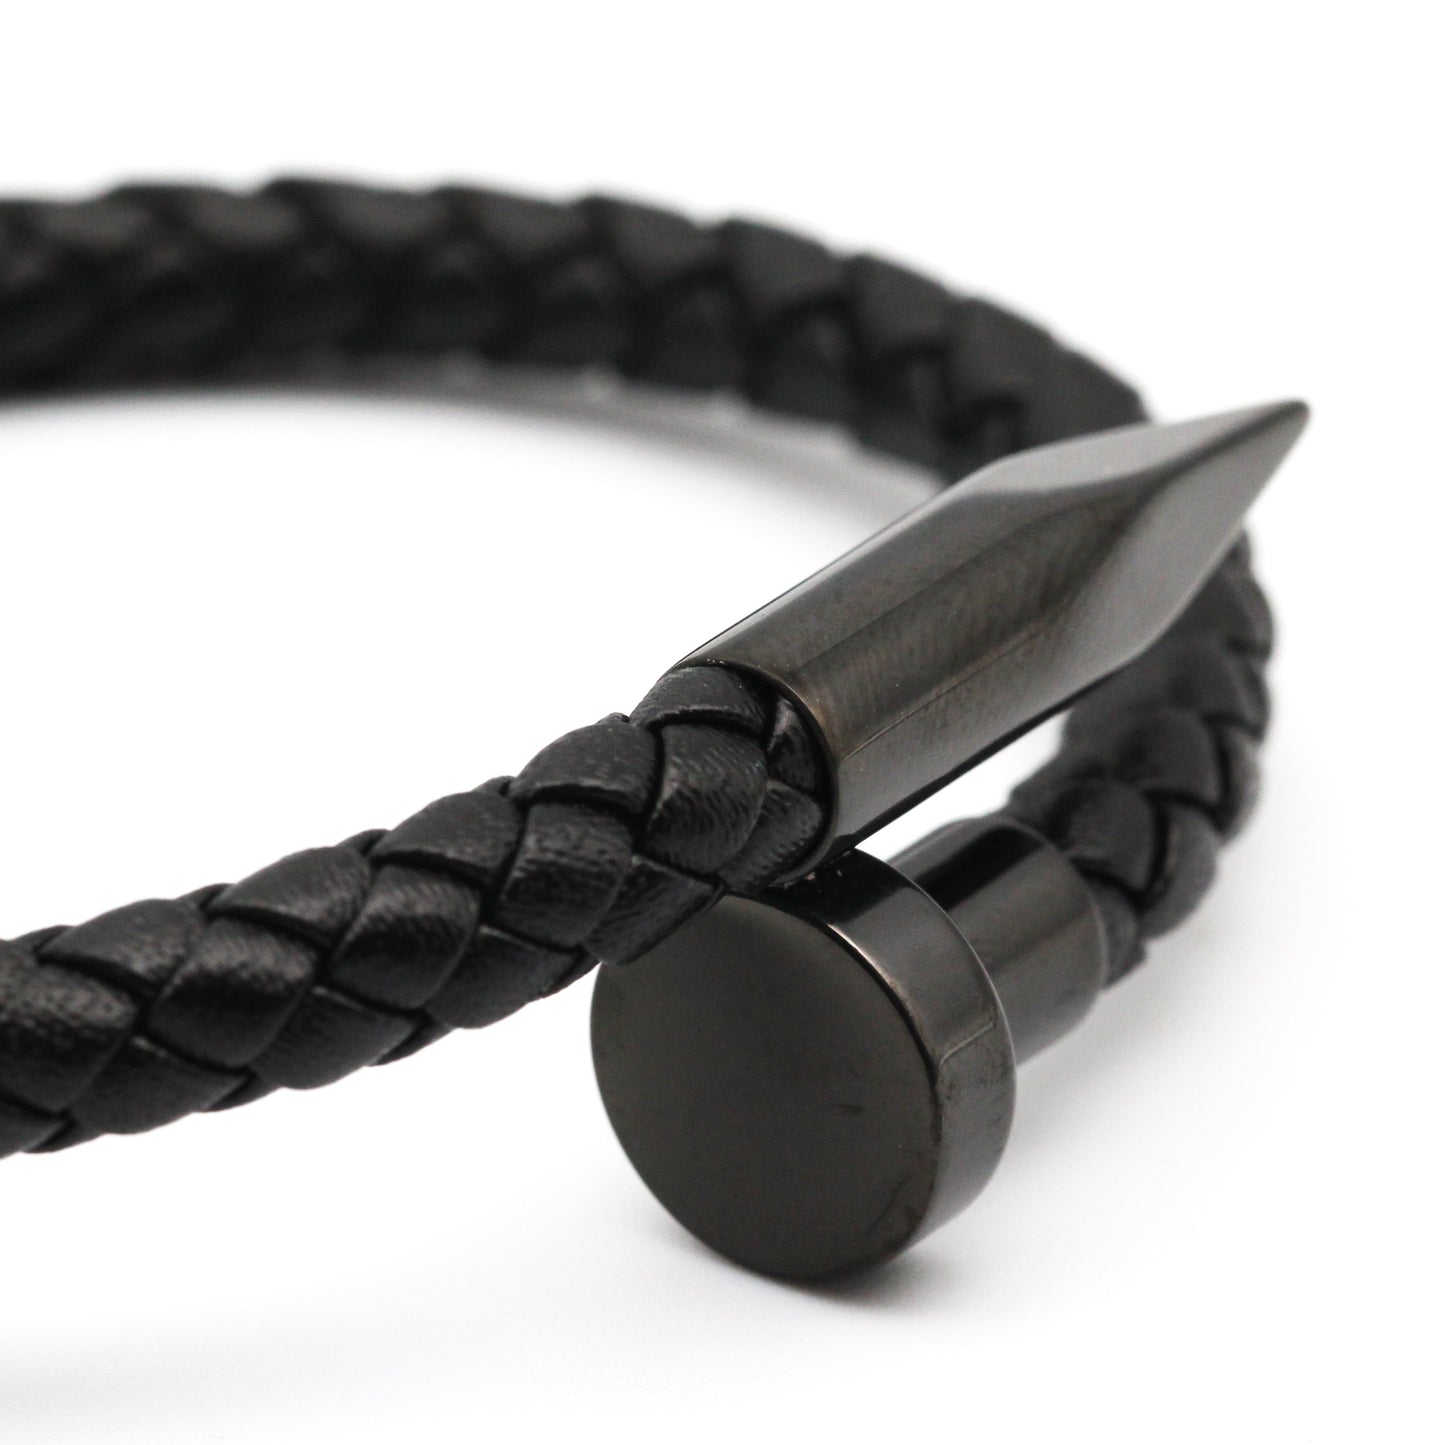 Camilo Black Leather Bracelet